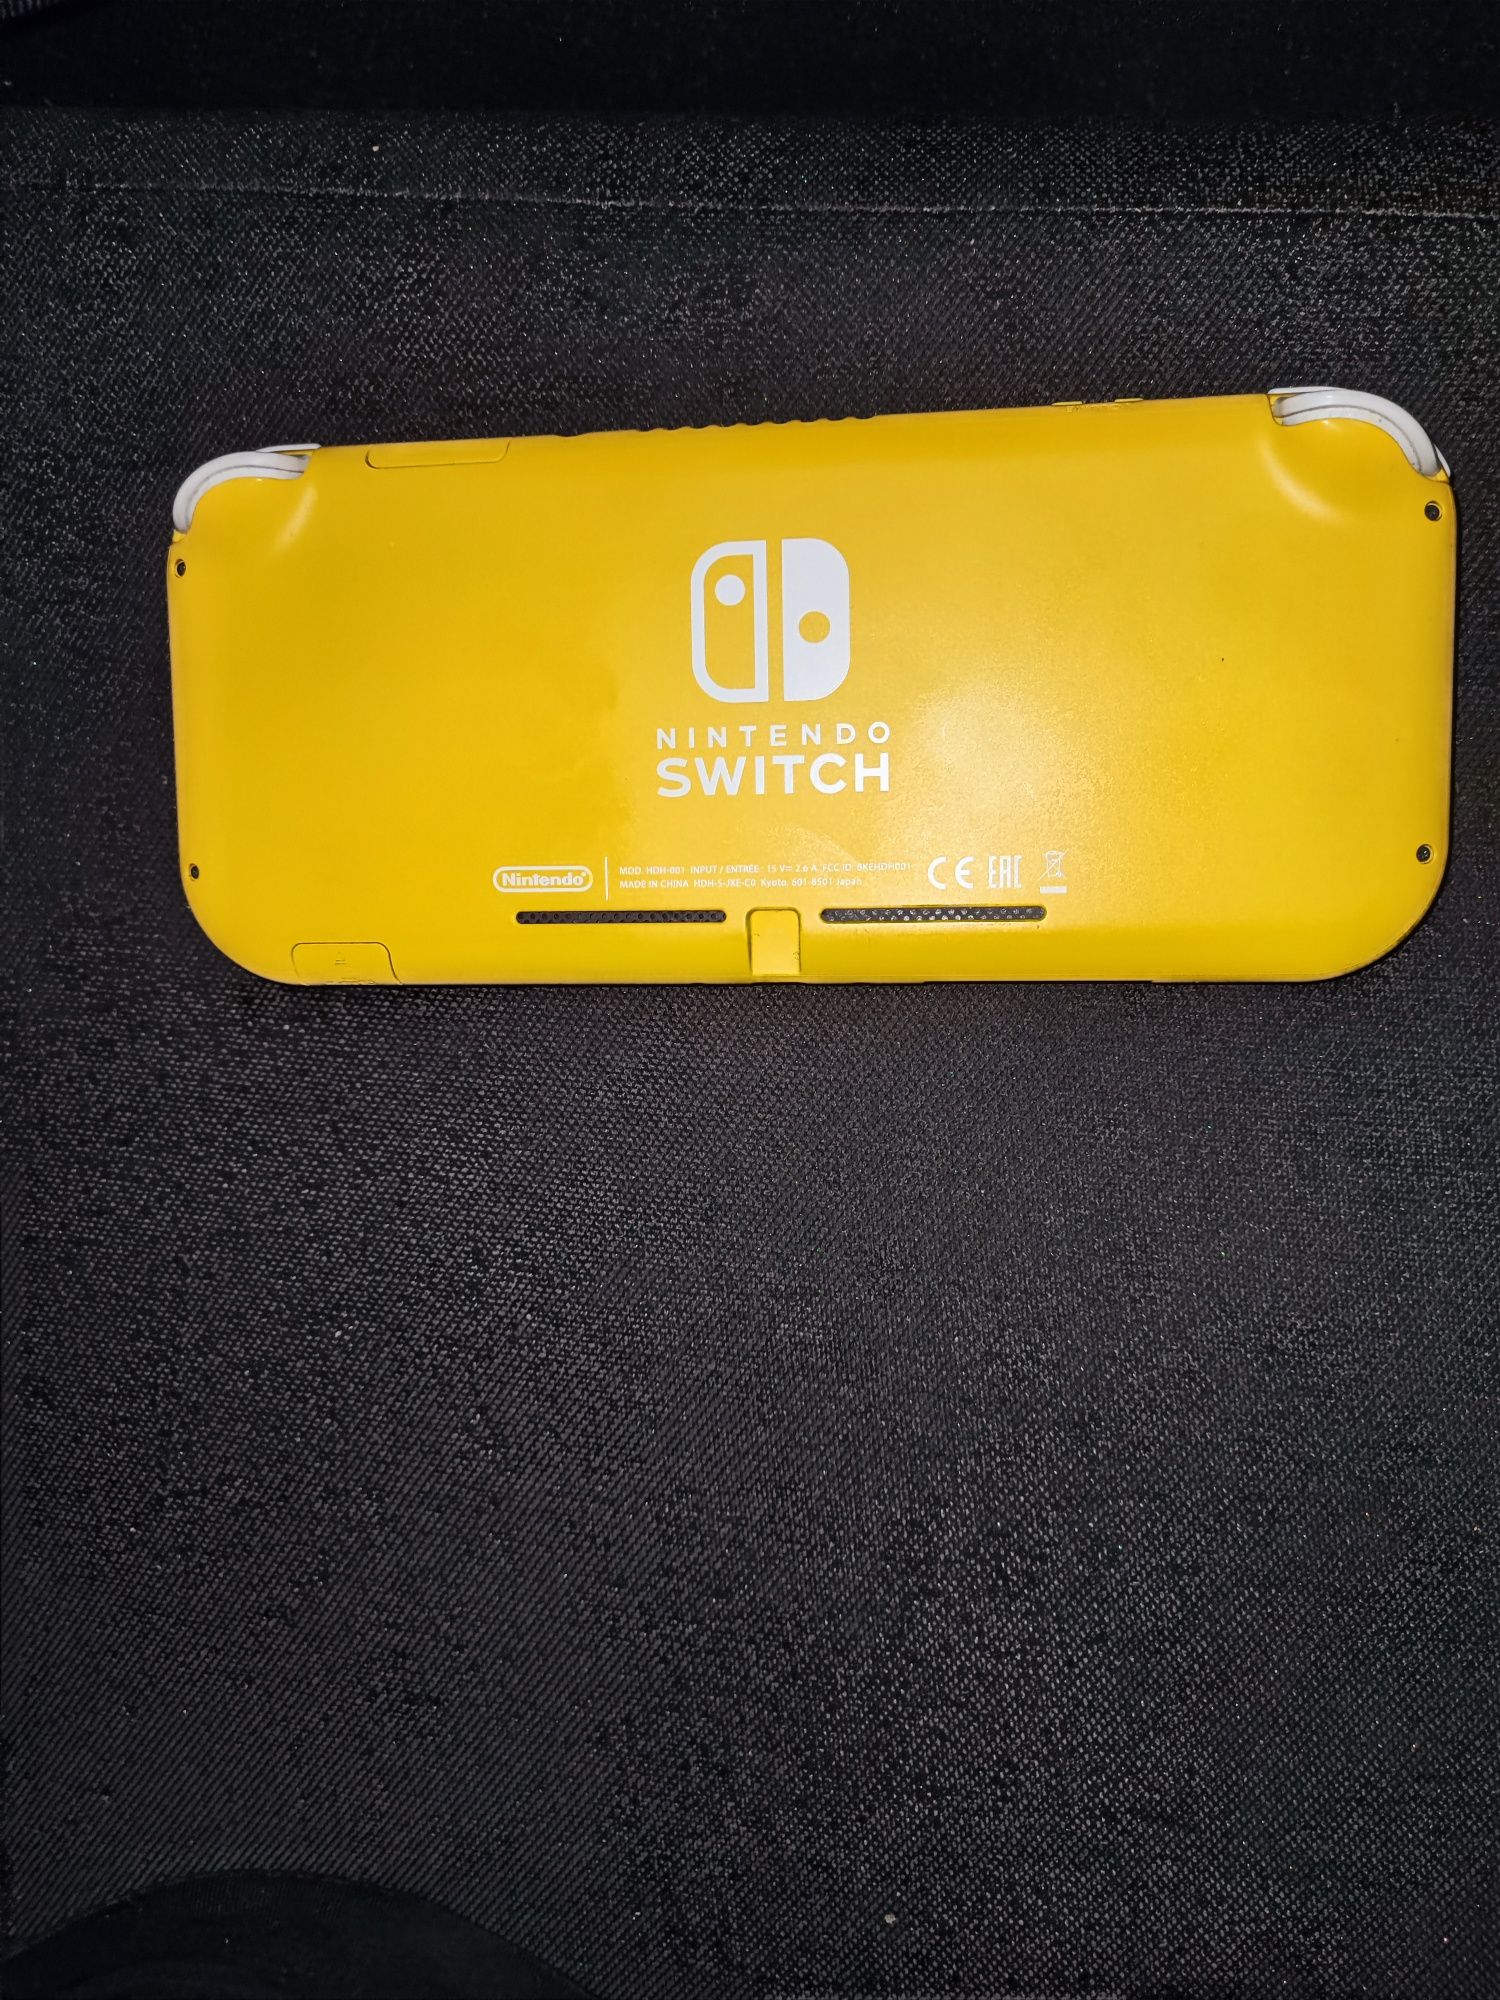 Nintendo switch lite cfw 512gb